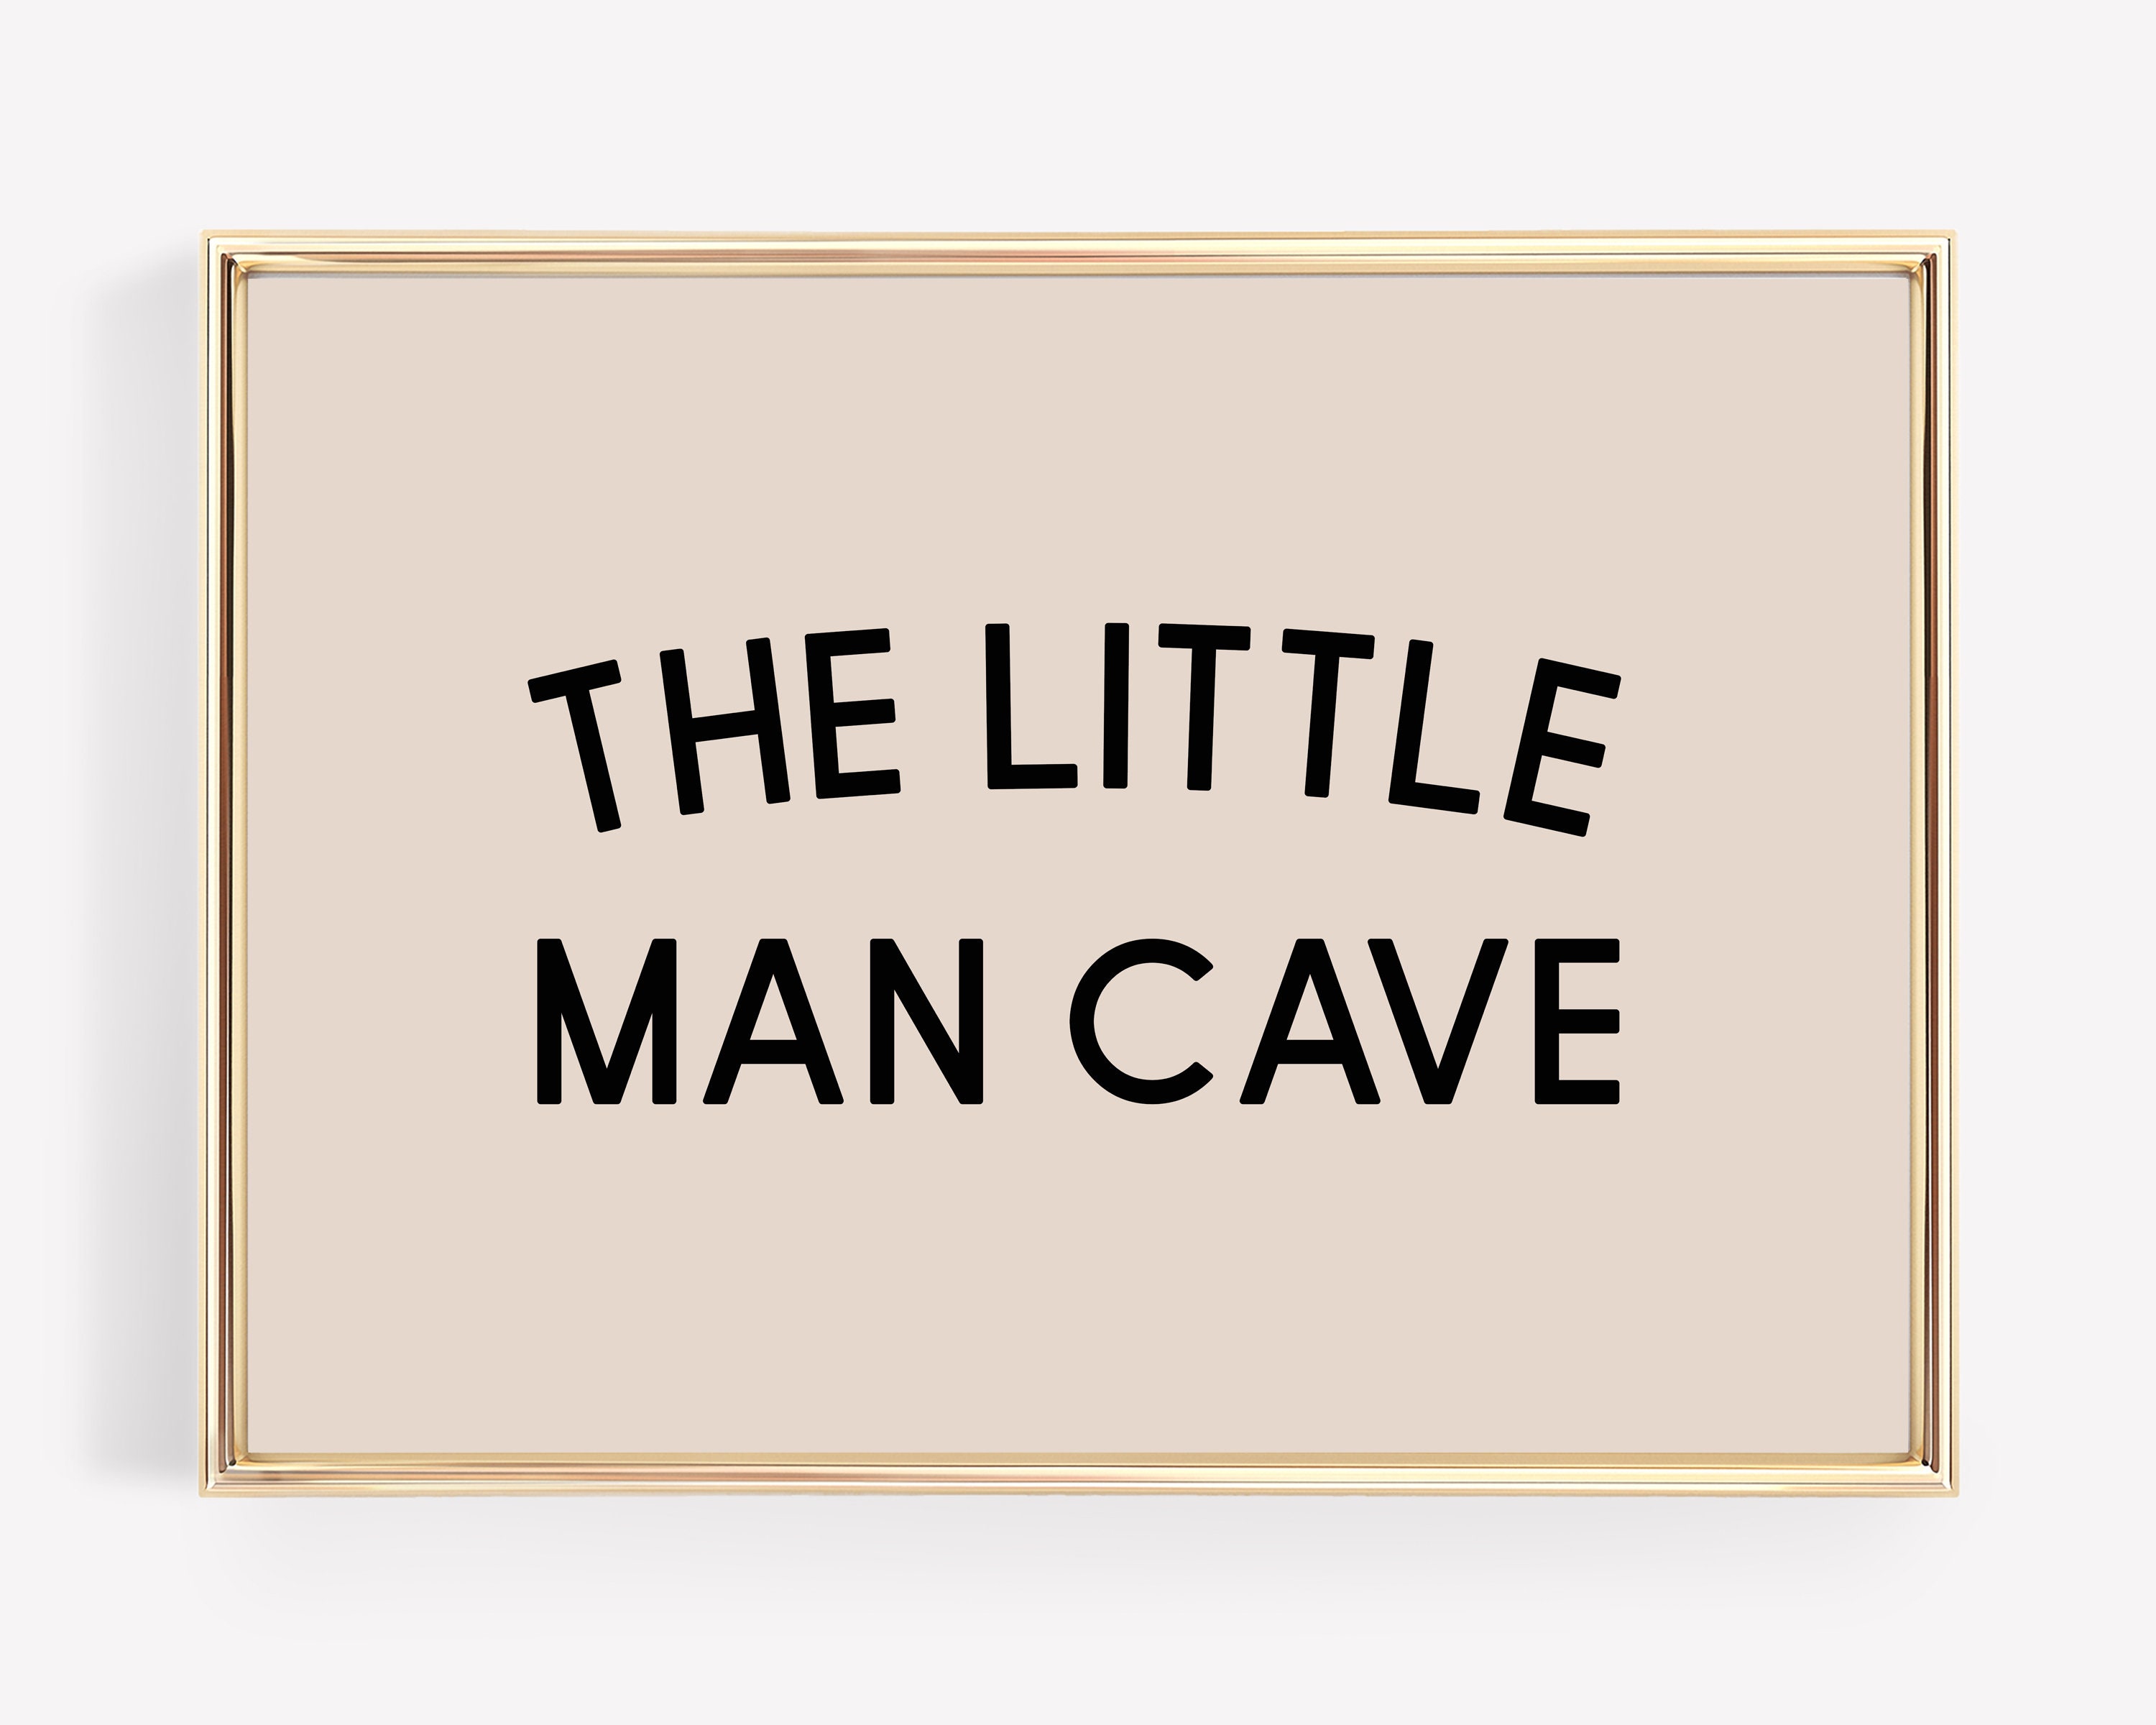  Hypebeast Kaw Poster Metal Tin Sign 8 x 12 Vintage Retro Man  Cave Wall Decor : Home & Kitchen